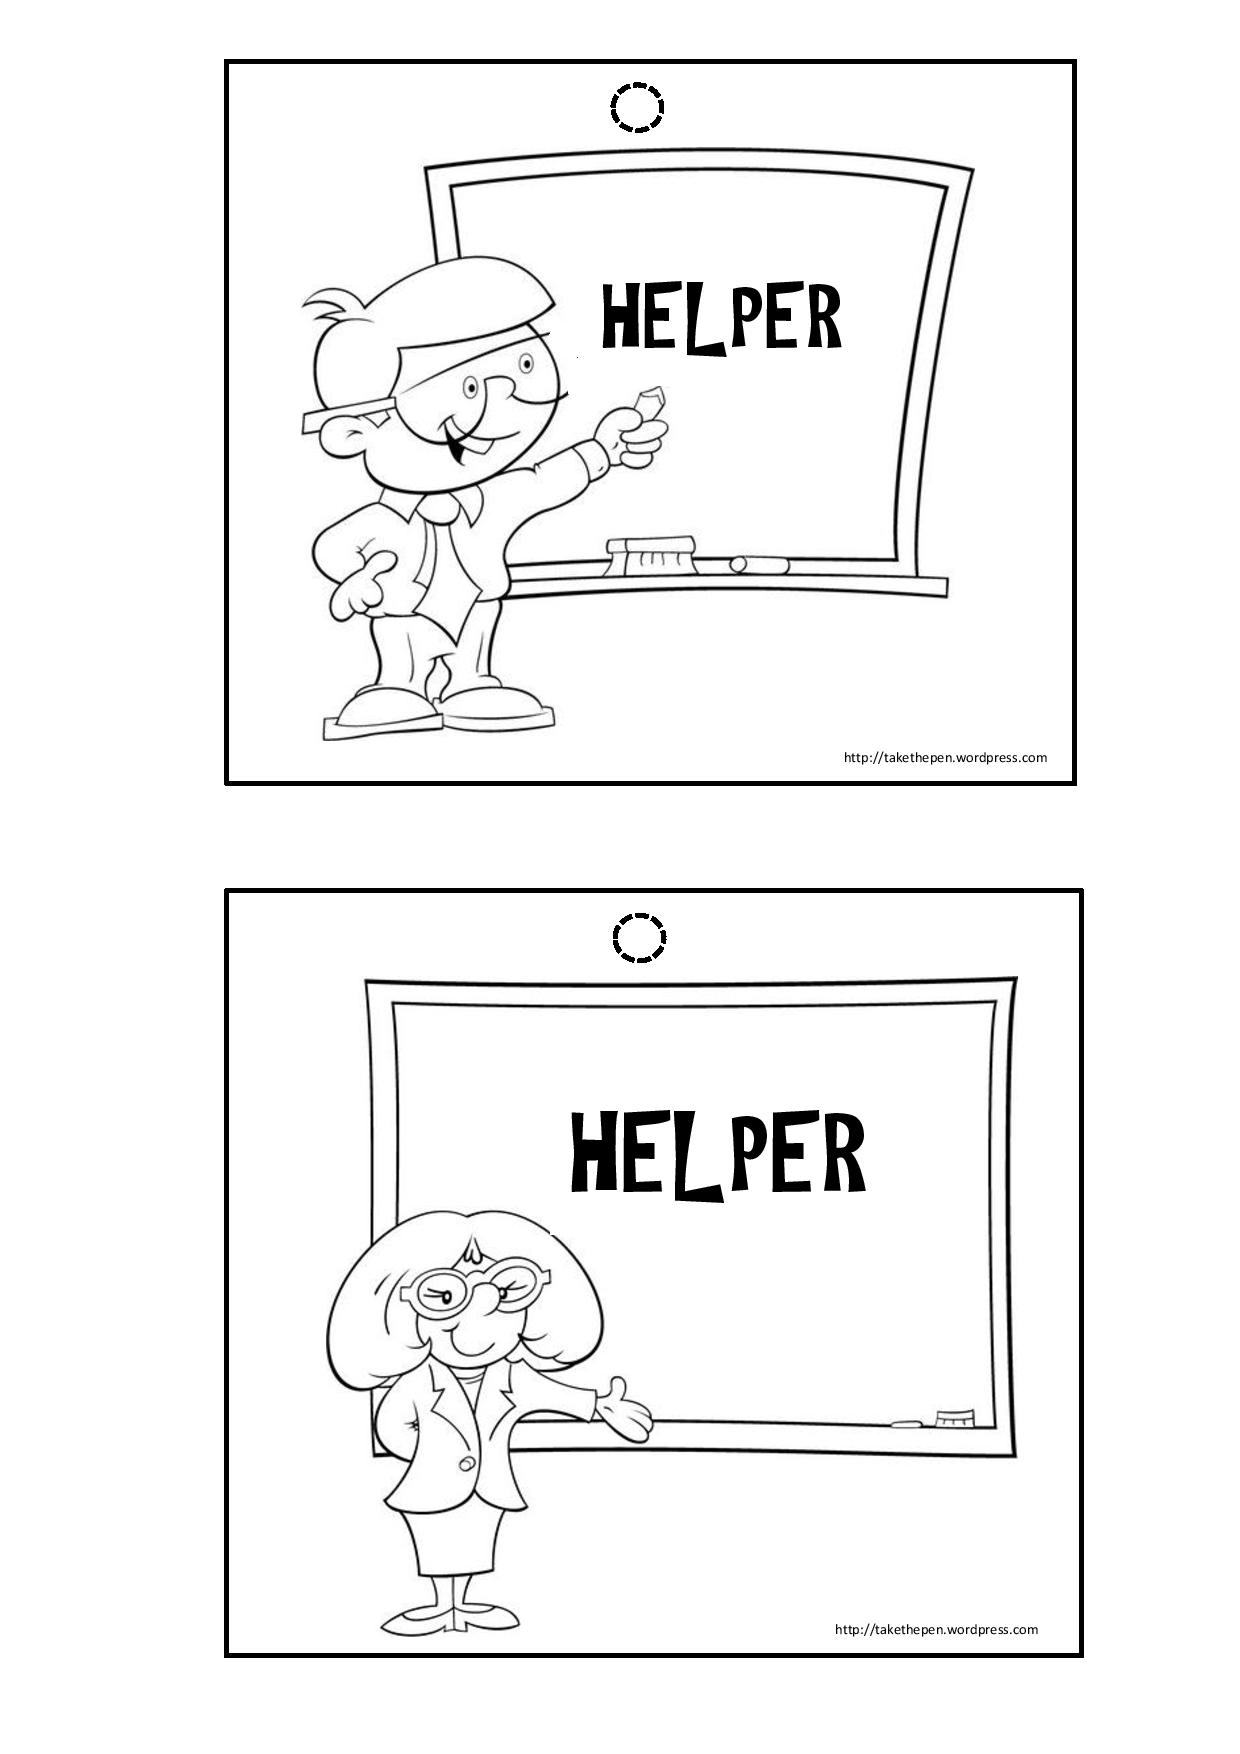 Teacher helper